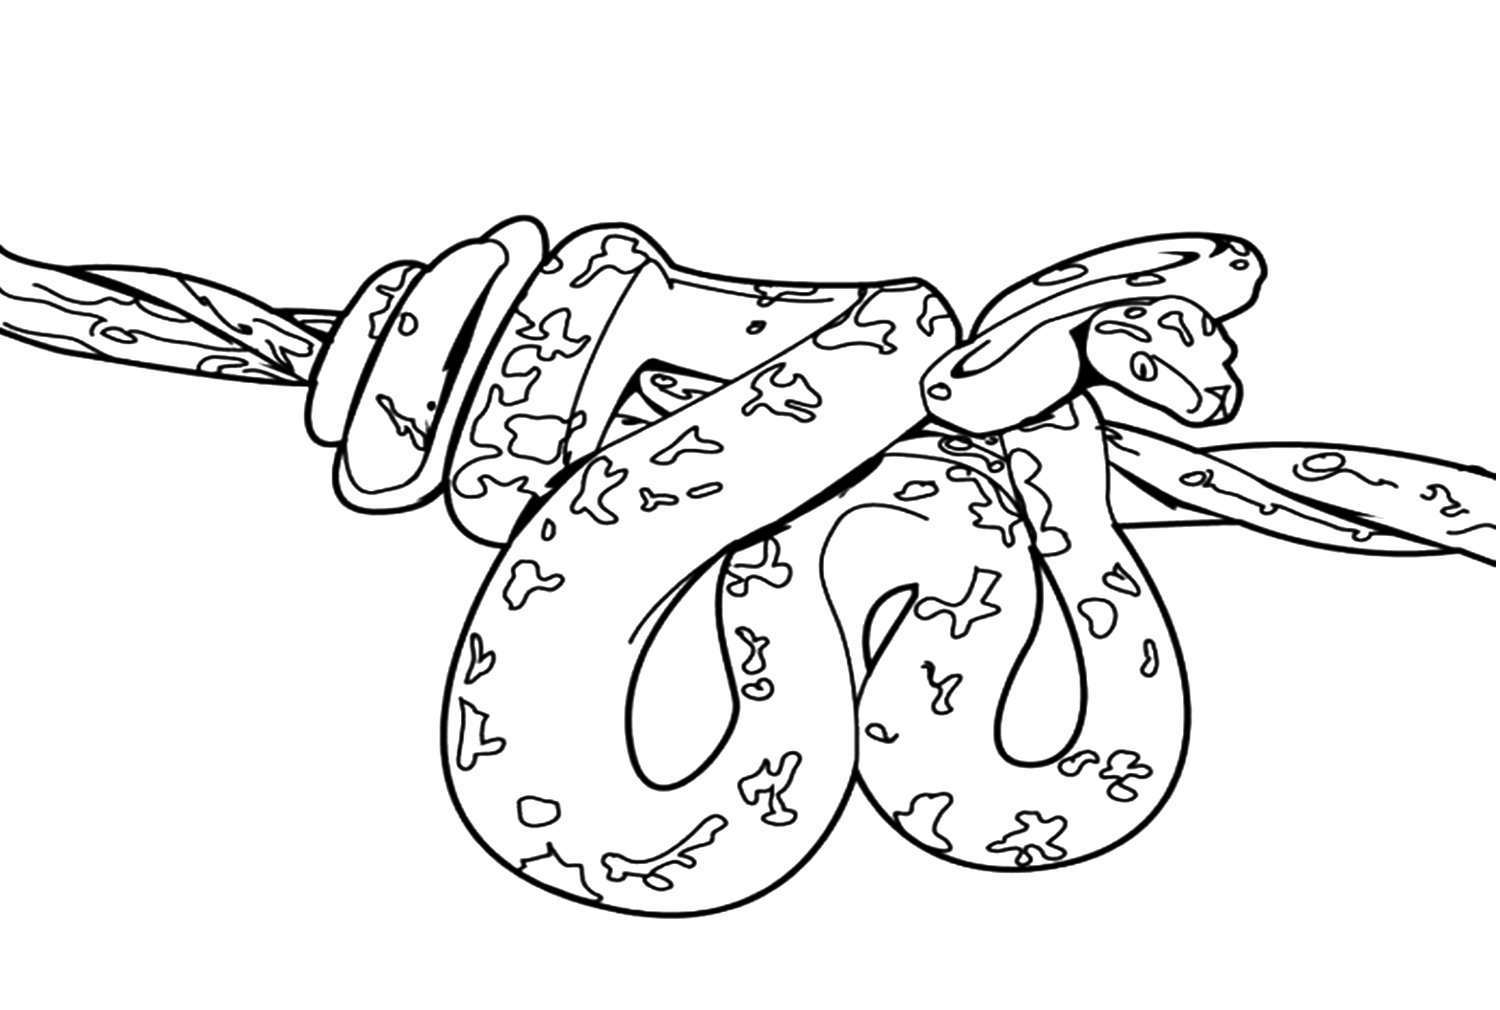 Змея раскраска. Раскраски змей. Змея раскраска для детей. Раскраска змеи для детей. Раскраски змей распечатать